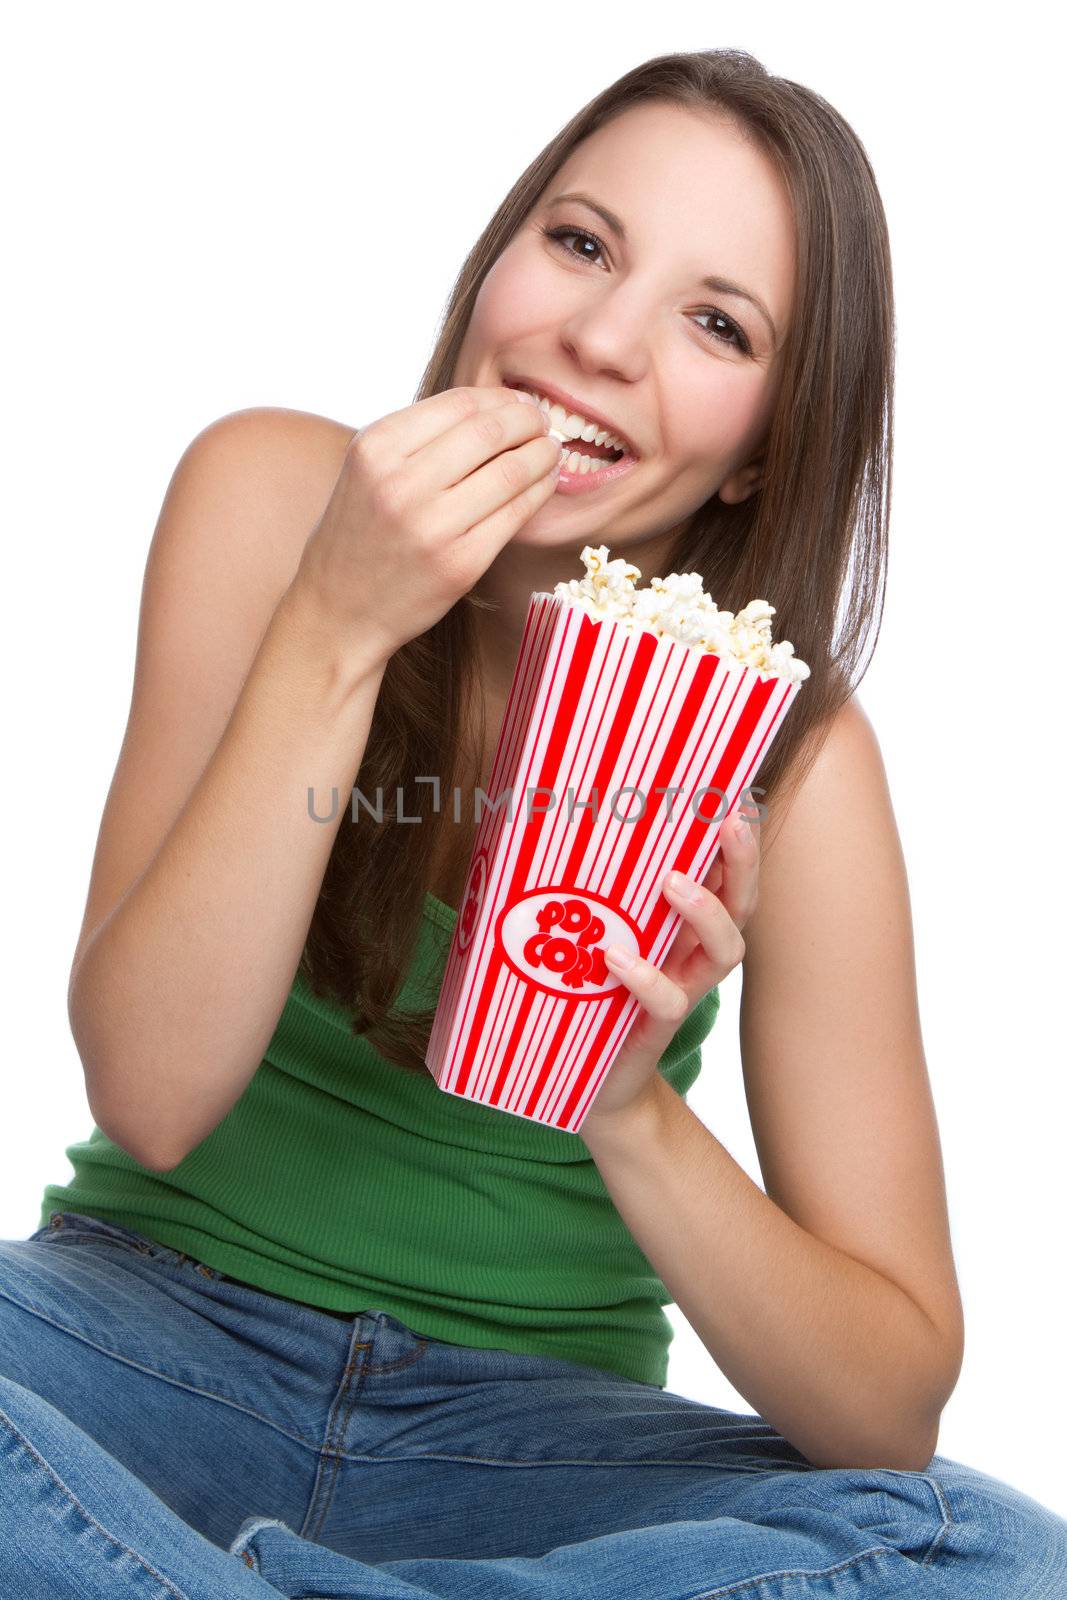 Popcorn Girl by keeweeboy